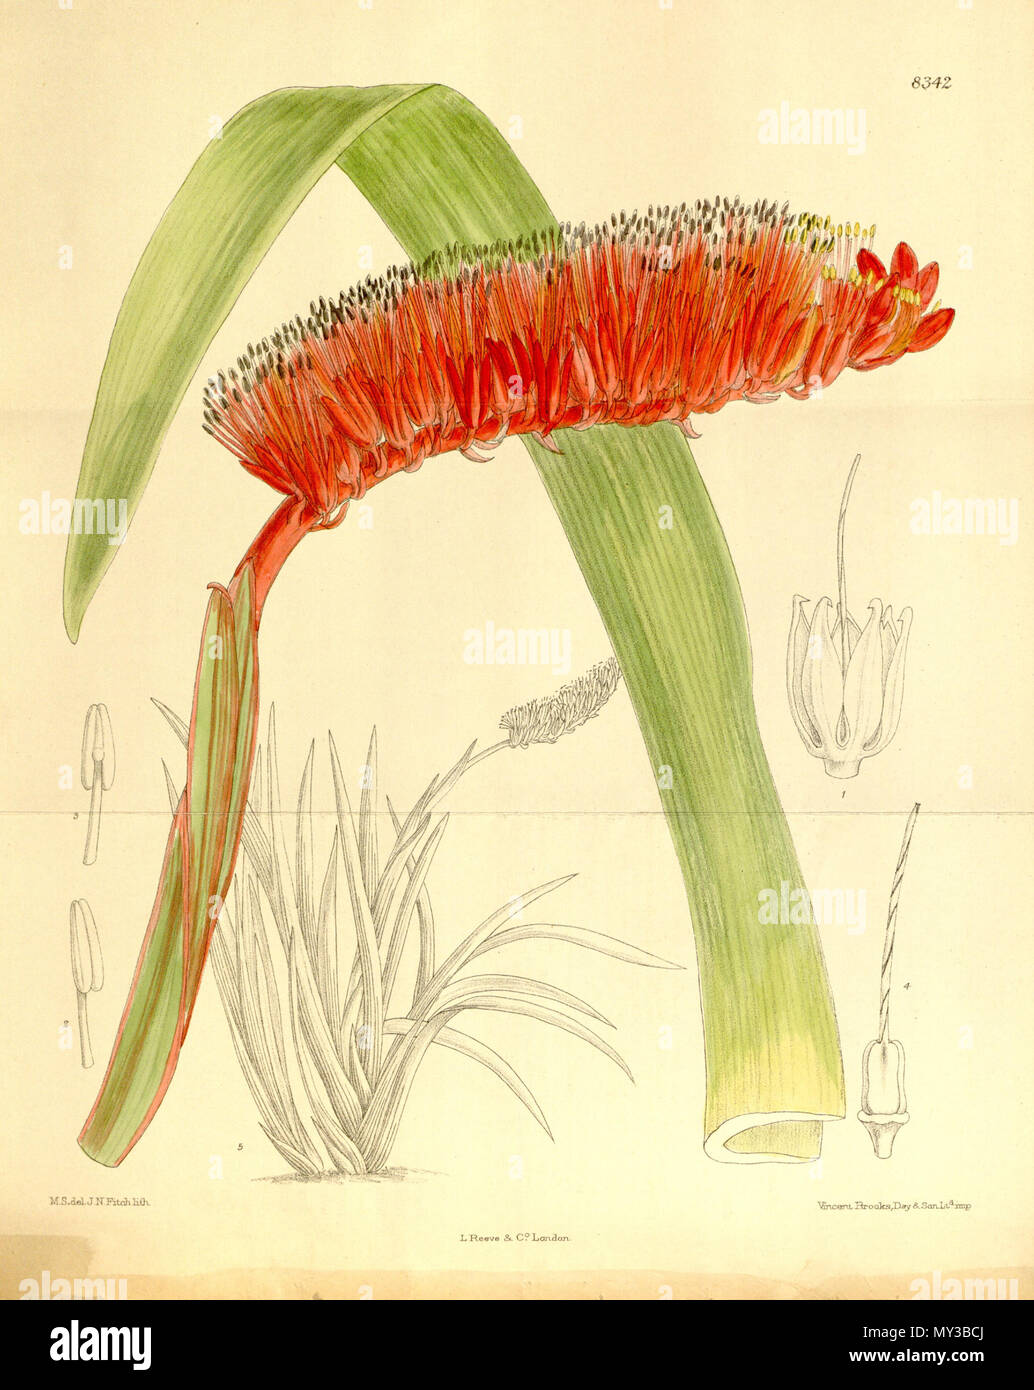 . Xeronema moorii, Xeronemataceae . 1910. M.S. del., J.N.Fitch lith. 569 Xeronema moorii 136-8342 Stock Photo